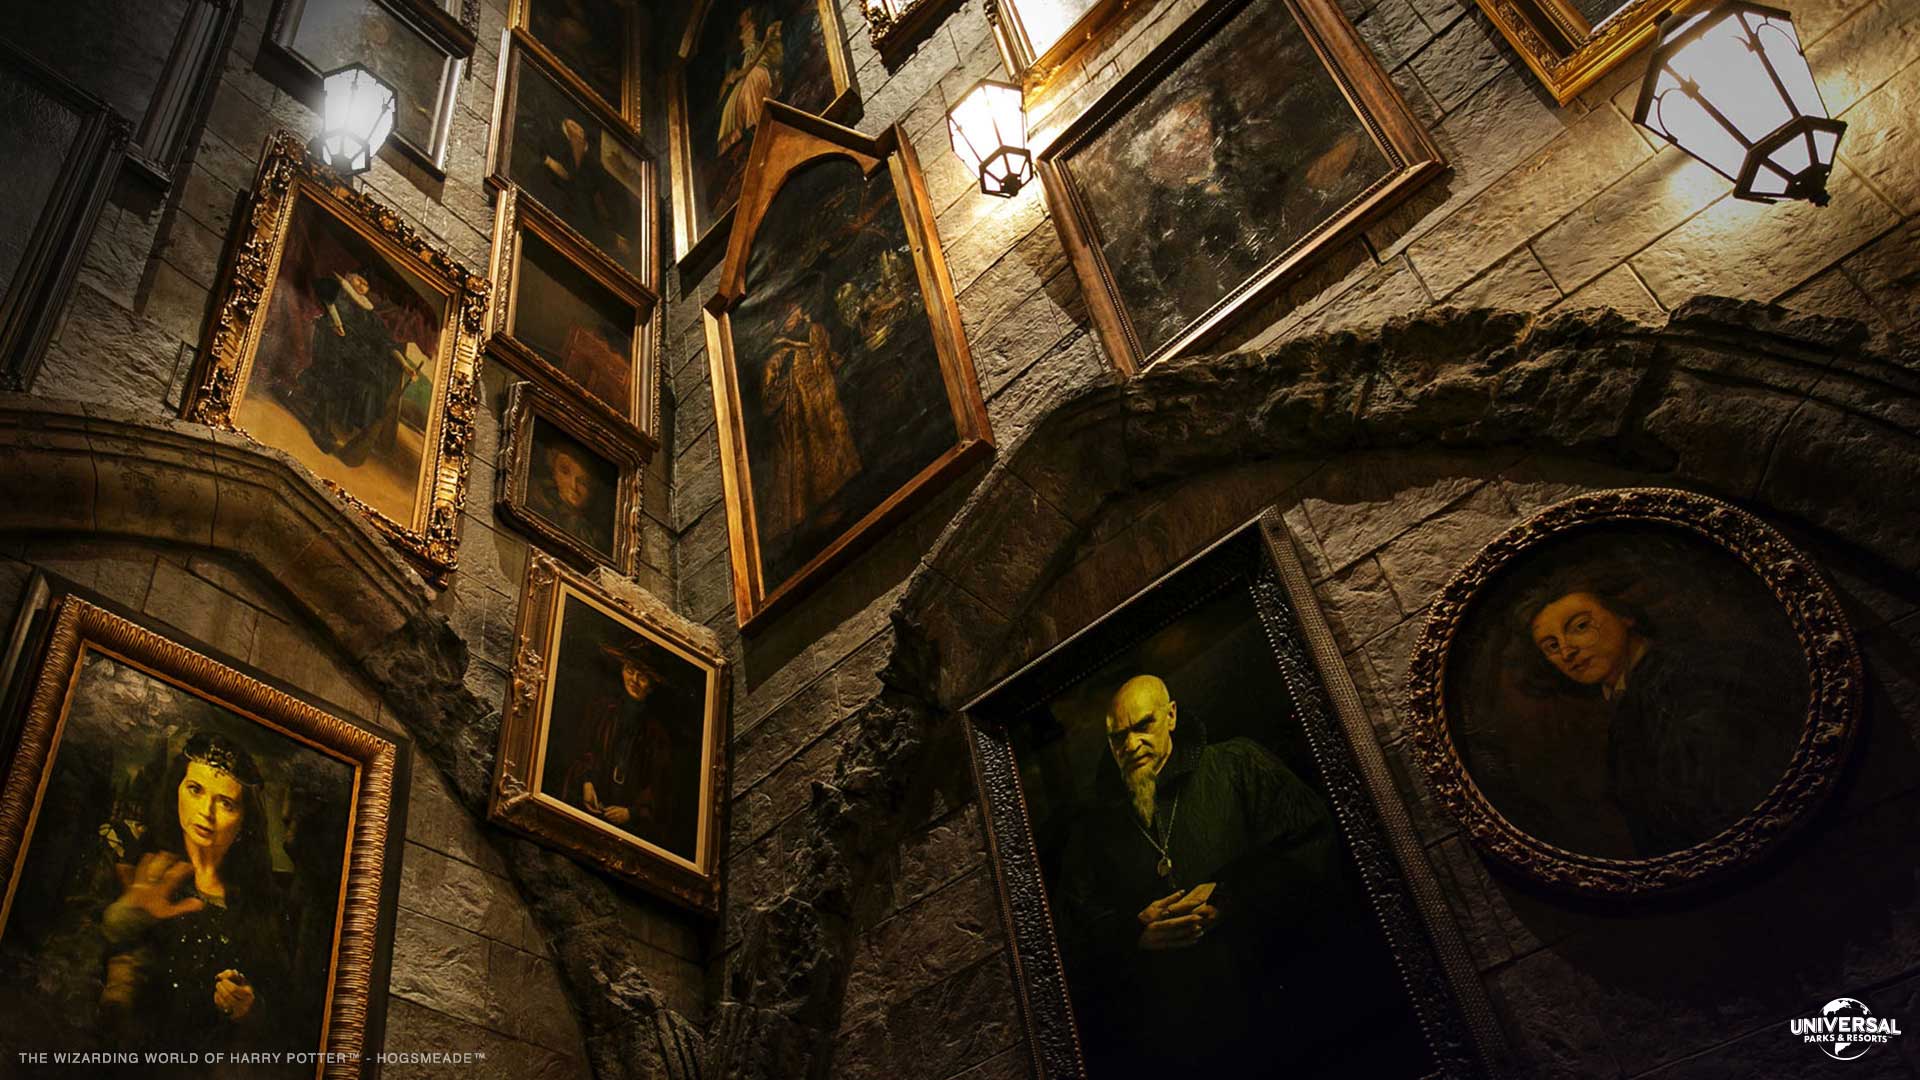 Harry Potter 7 - Hogwarts portrait wall, Universal Studios Hollywood